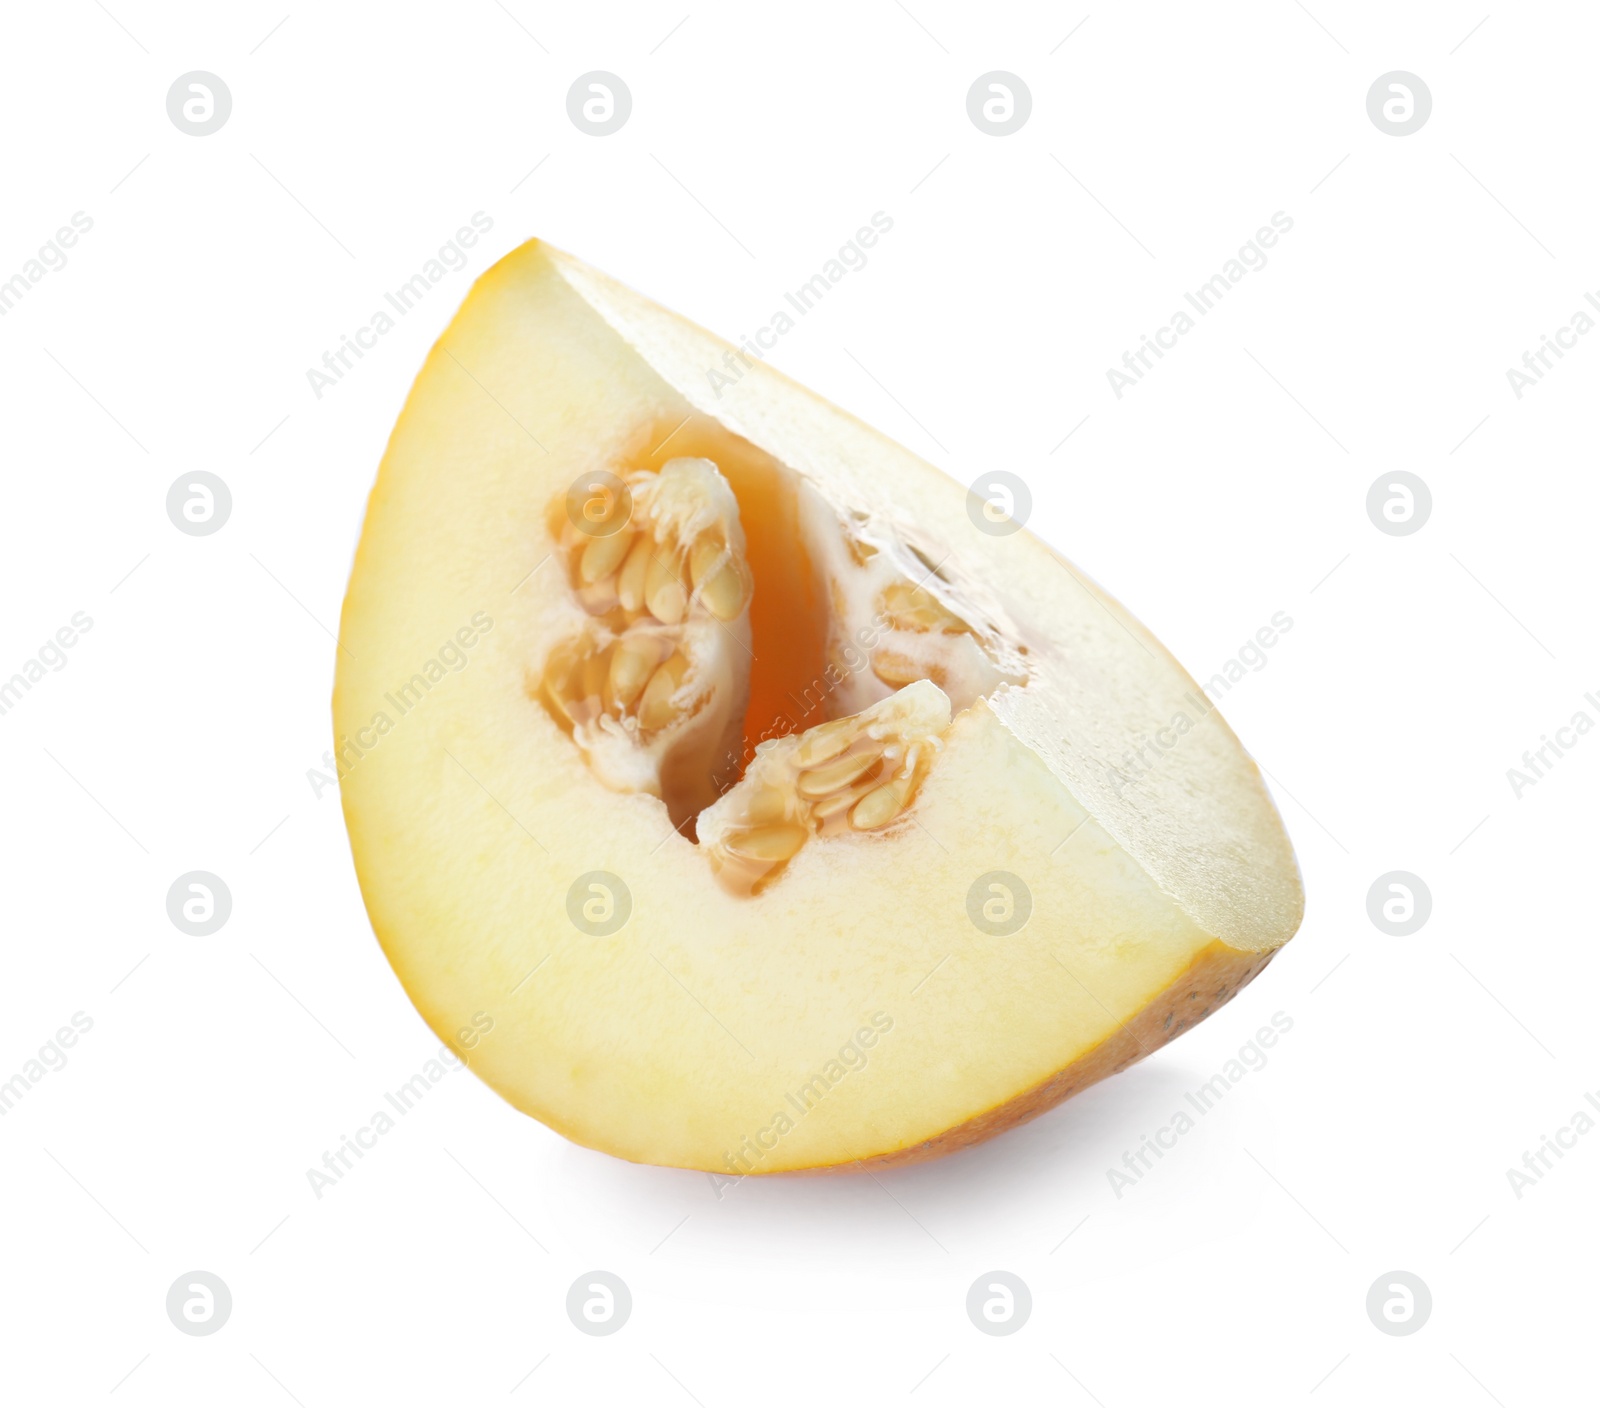 Photo of Piece of tasty ripe melon on white background